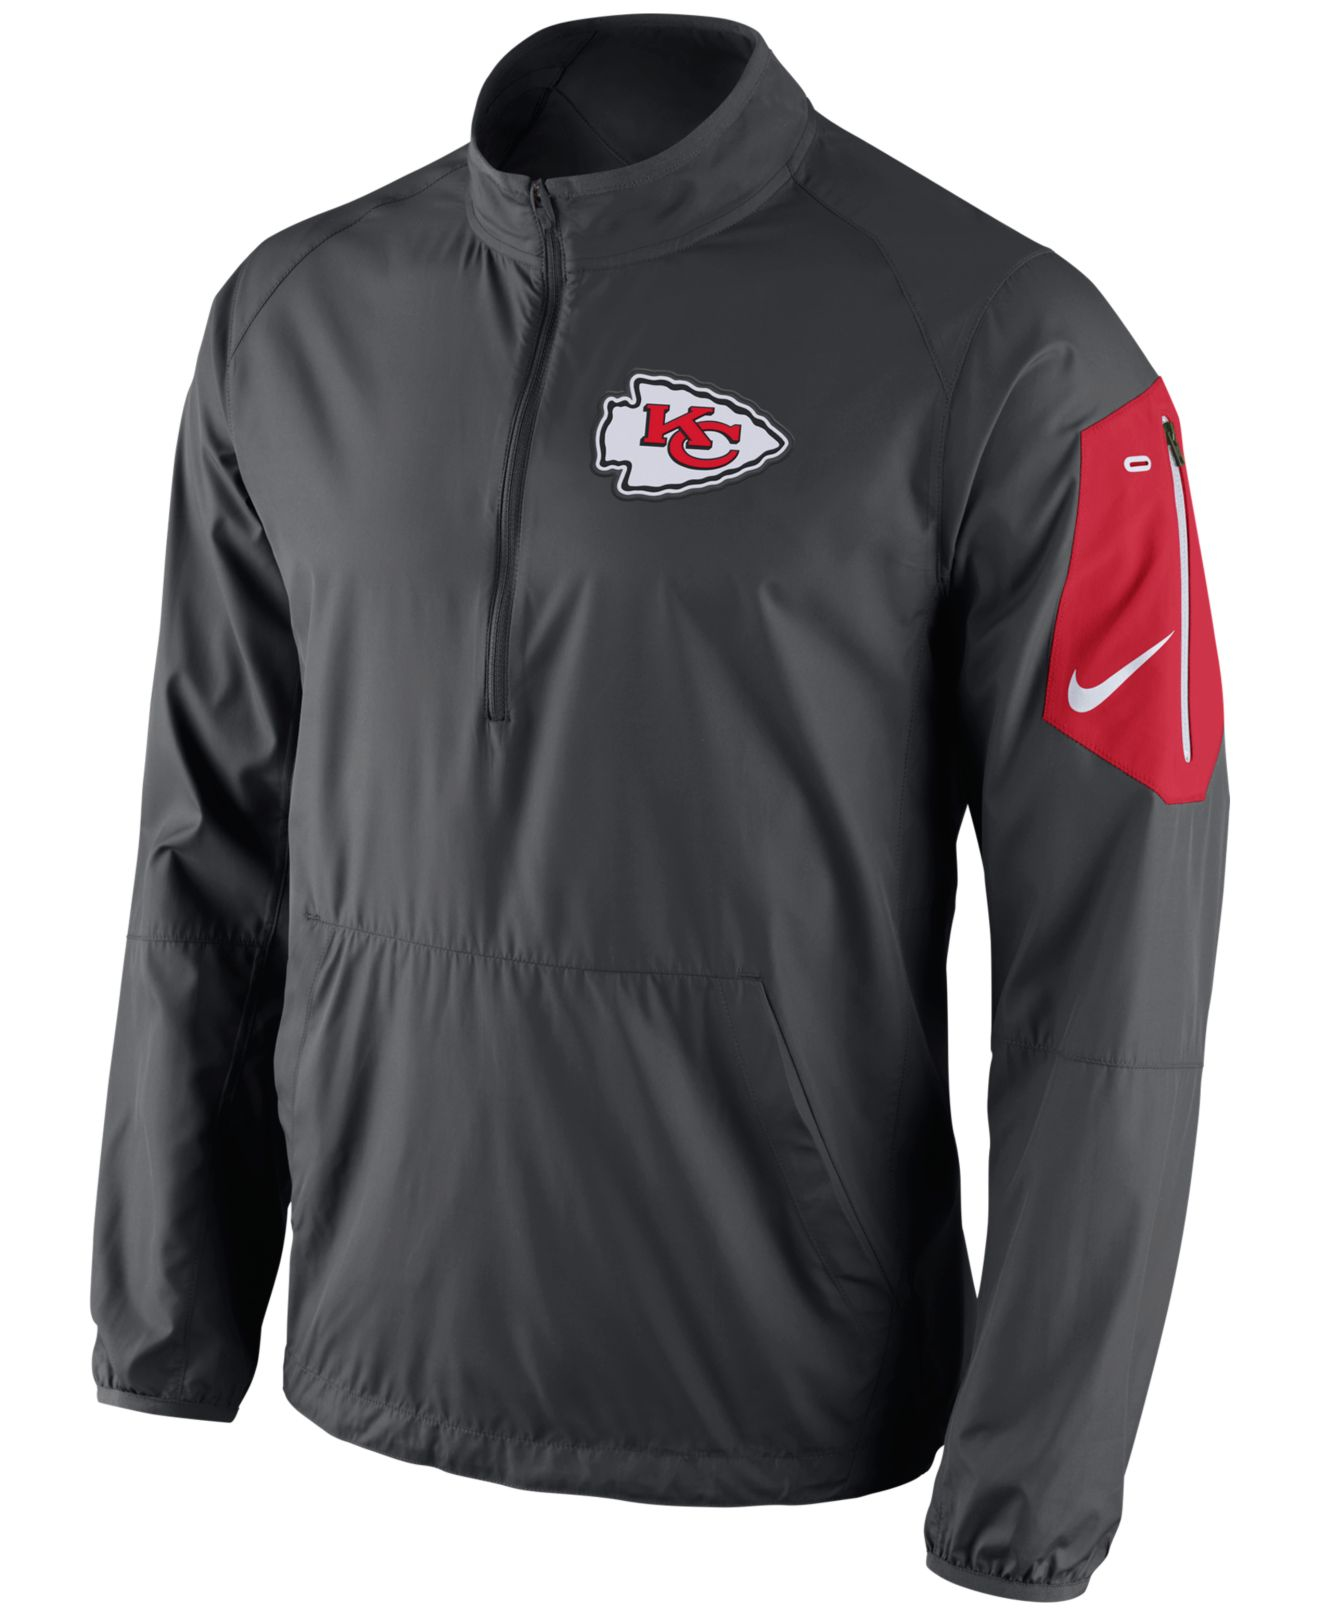 Lyst - Nike Men's Kansas City Chiefs Lockdown Half-zip Jacket in Gray for Men